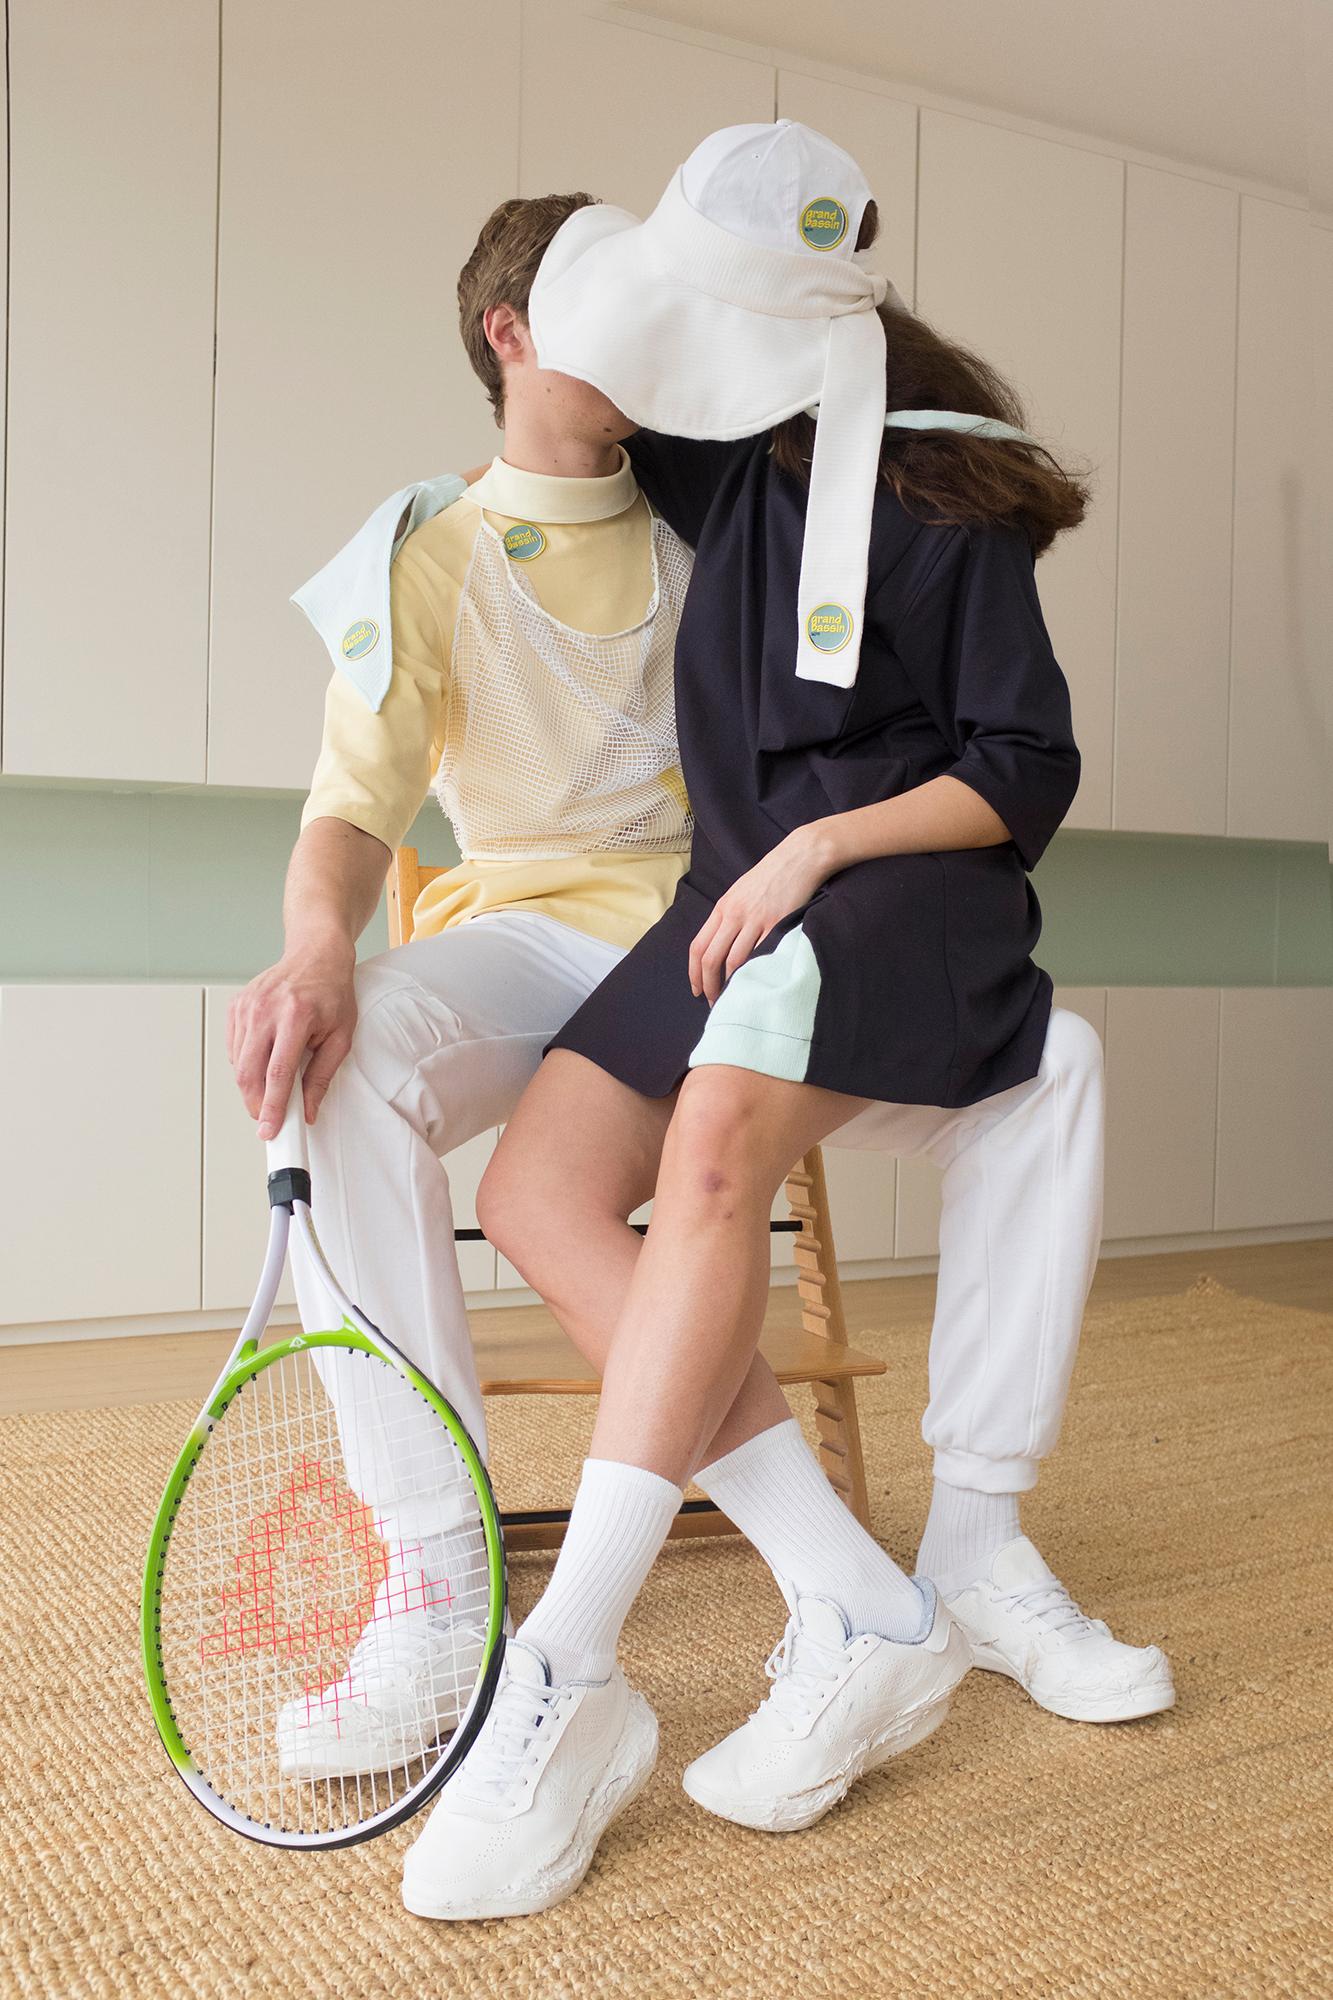 Collection 2020 - couple-kiss-navy-tennis-dress-yellow-polo-tennis-hat-2000x1333.jpg